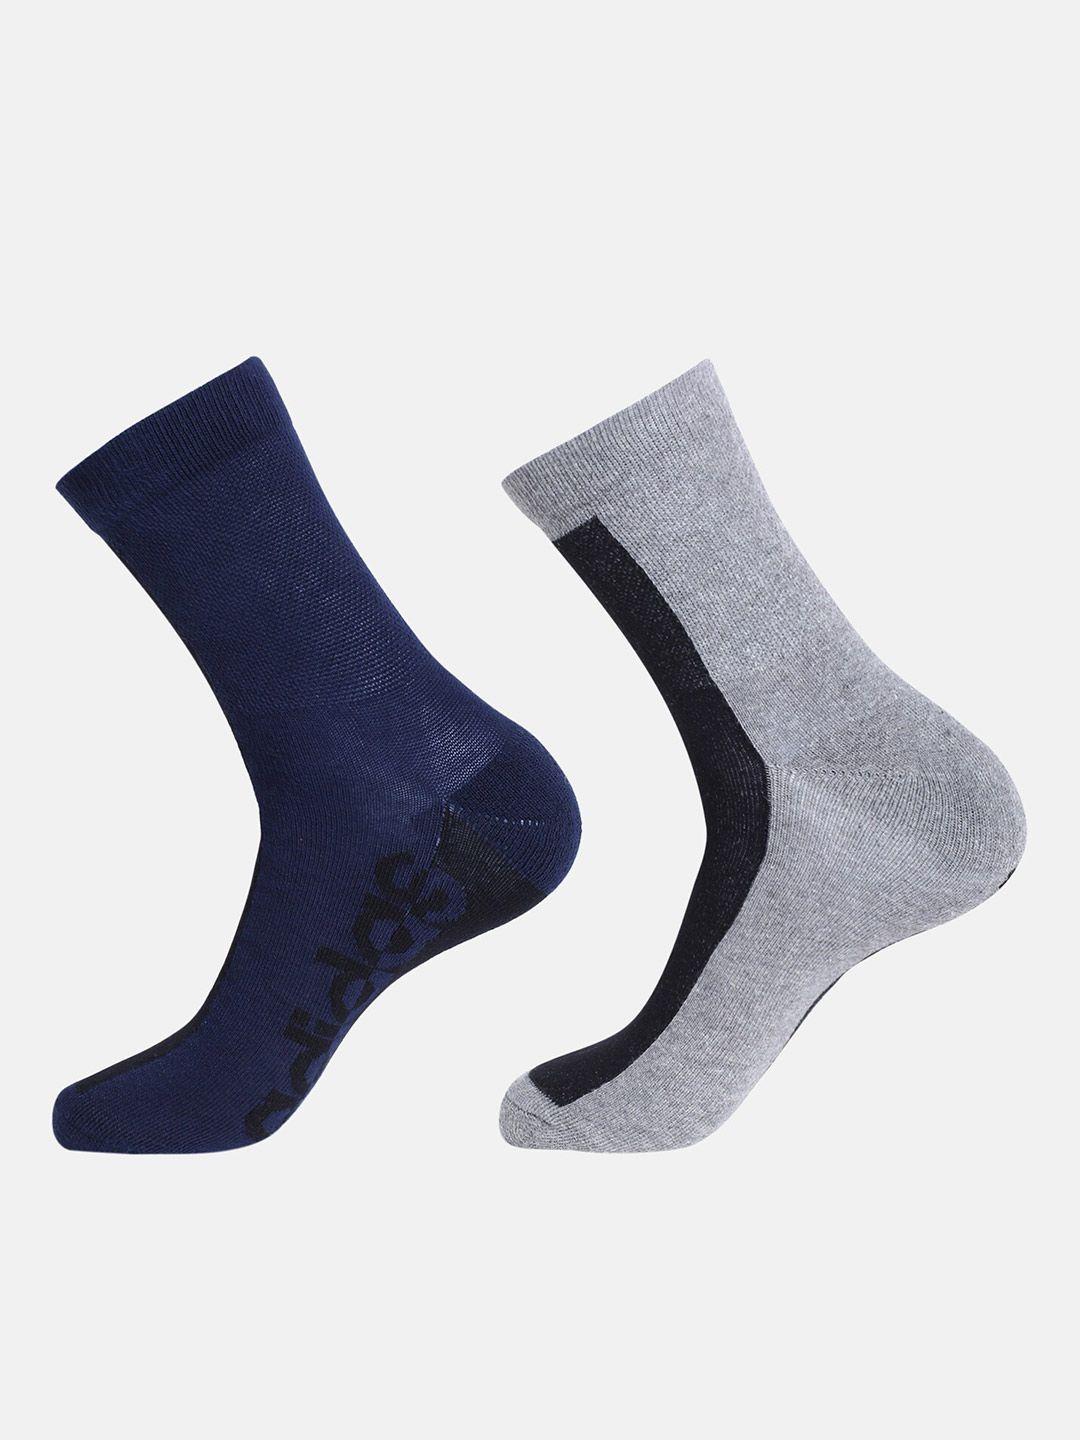 adidas-men-pack-of-2-patterned-calf-length-socks